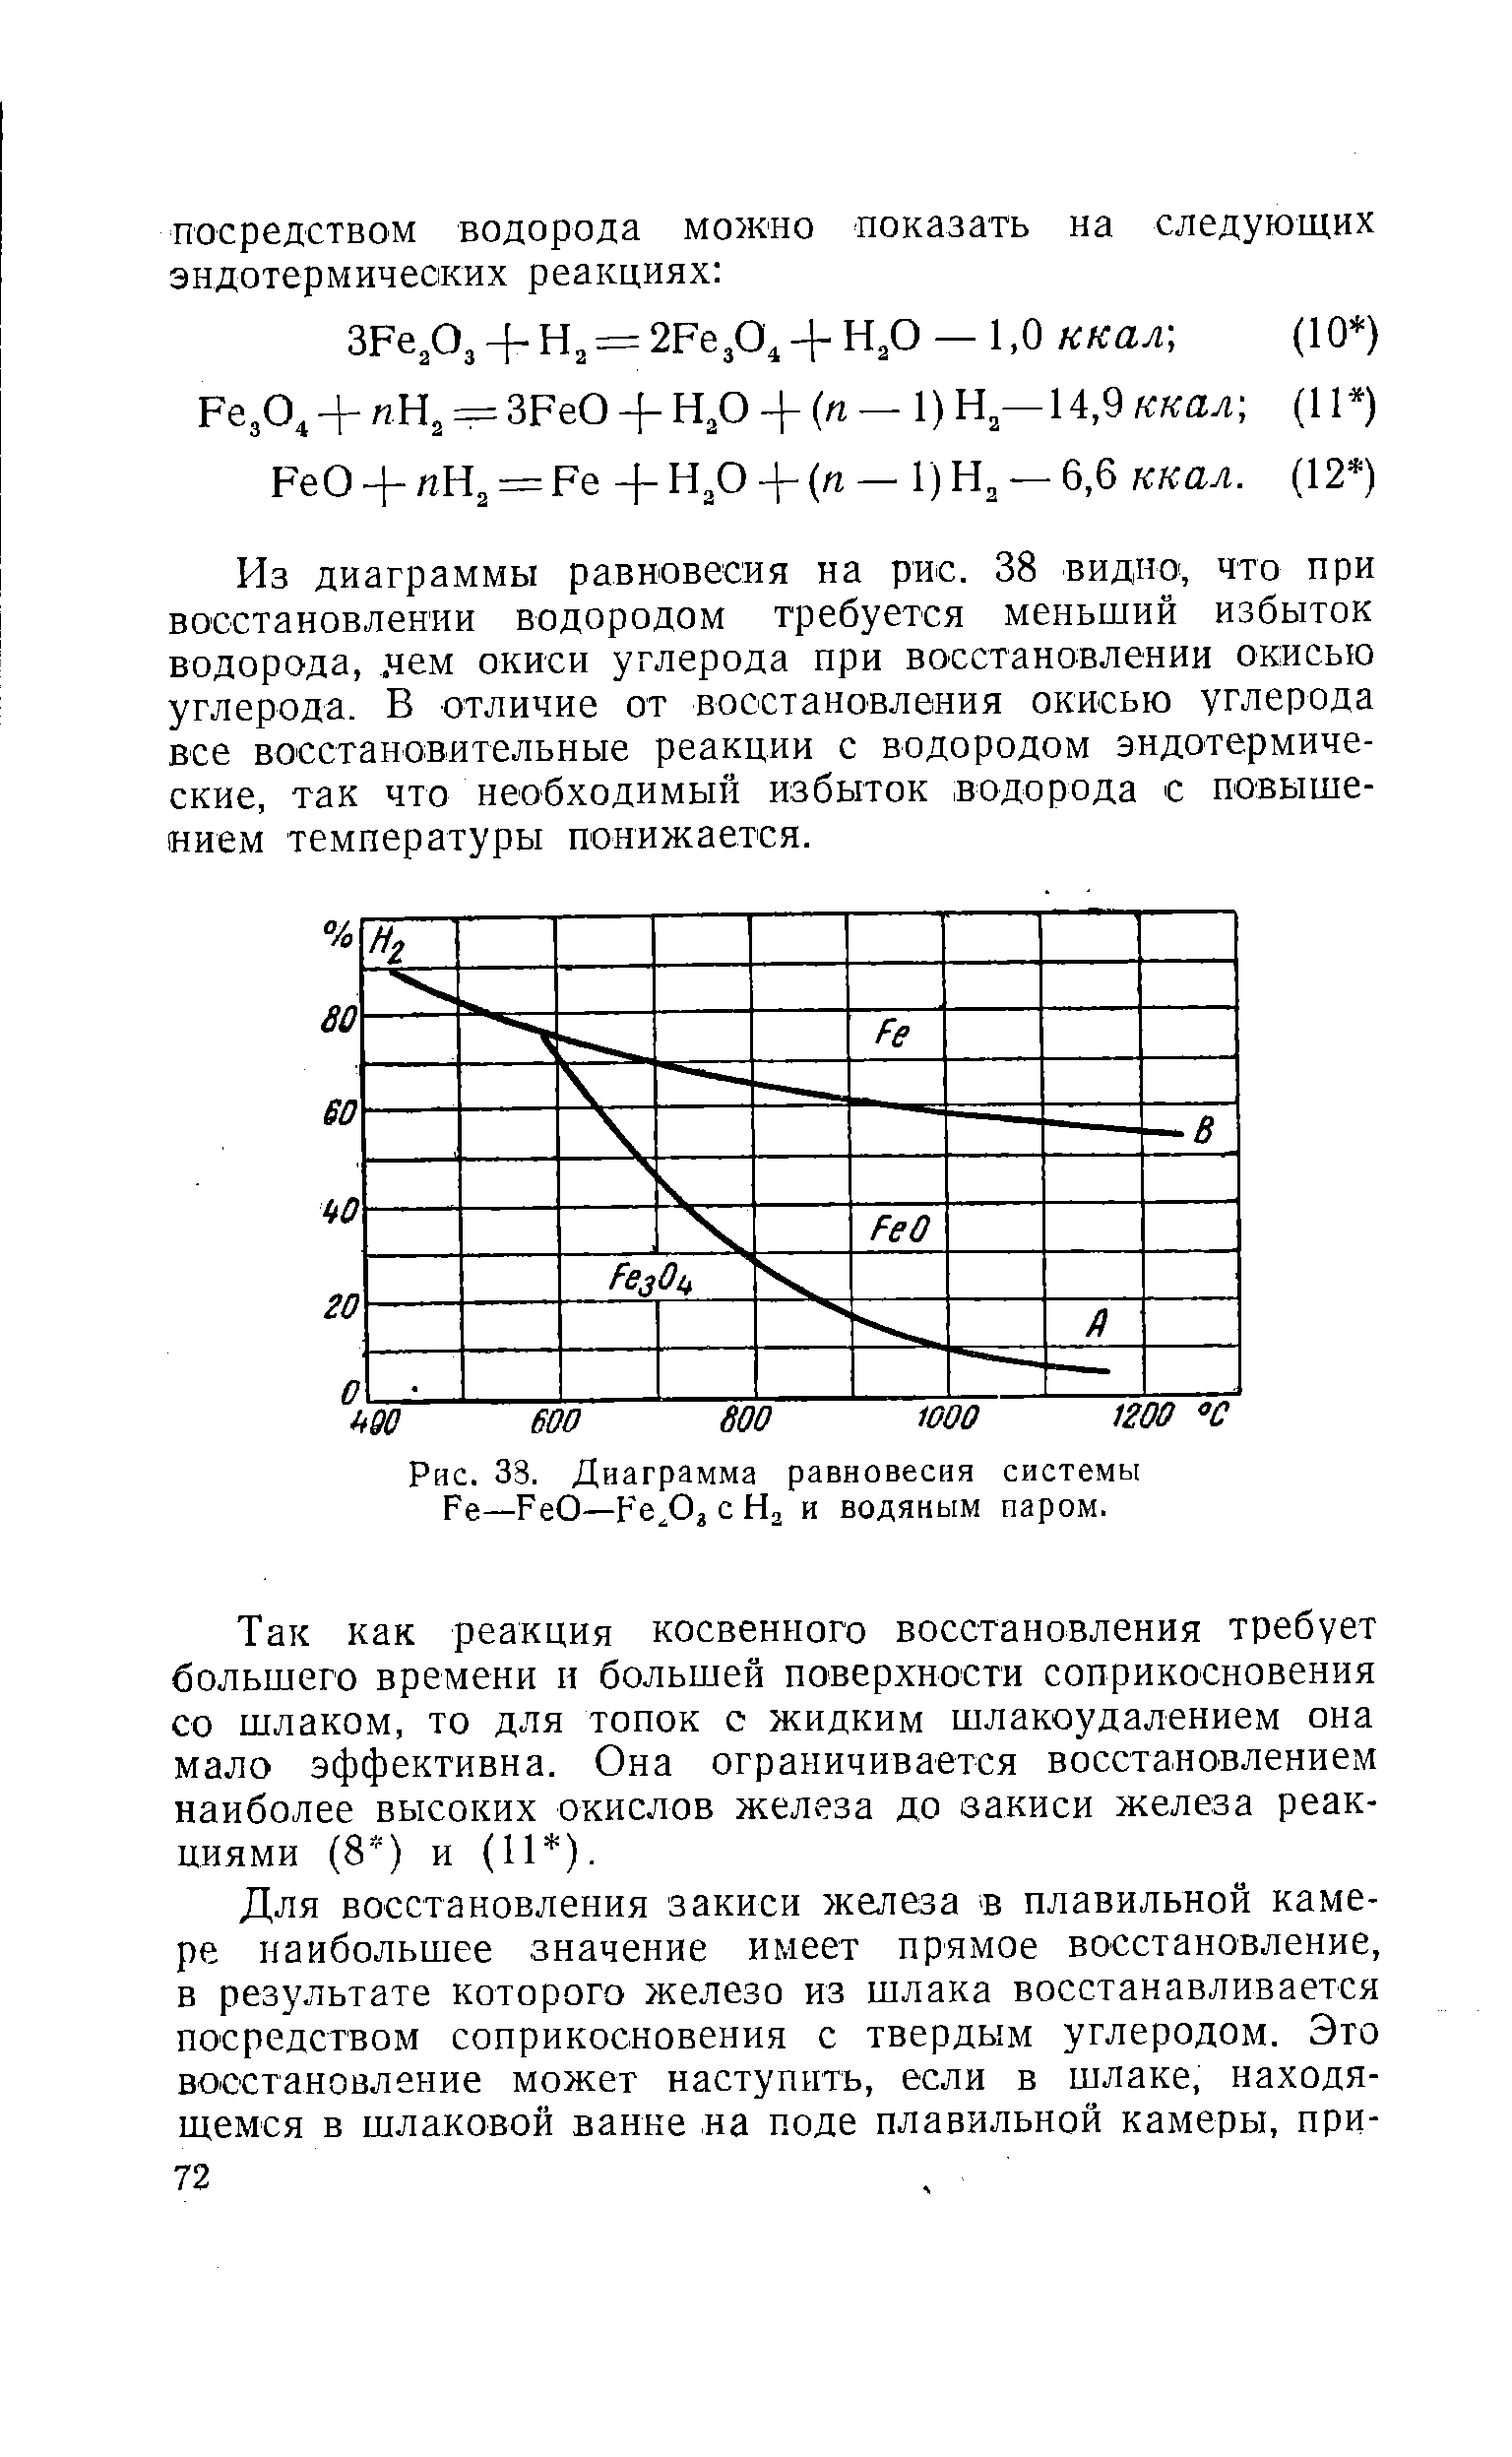 Рис. 33. Диаграмма равновесия системы Fe—FeO—Fe O Ha и водяным паром.
